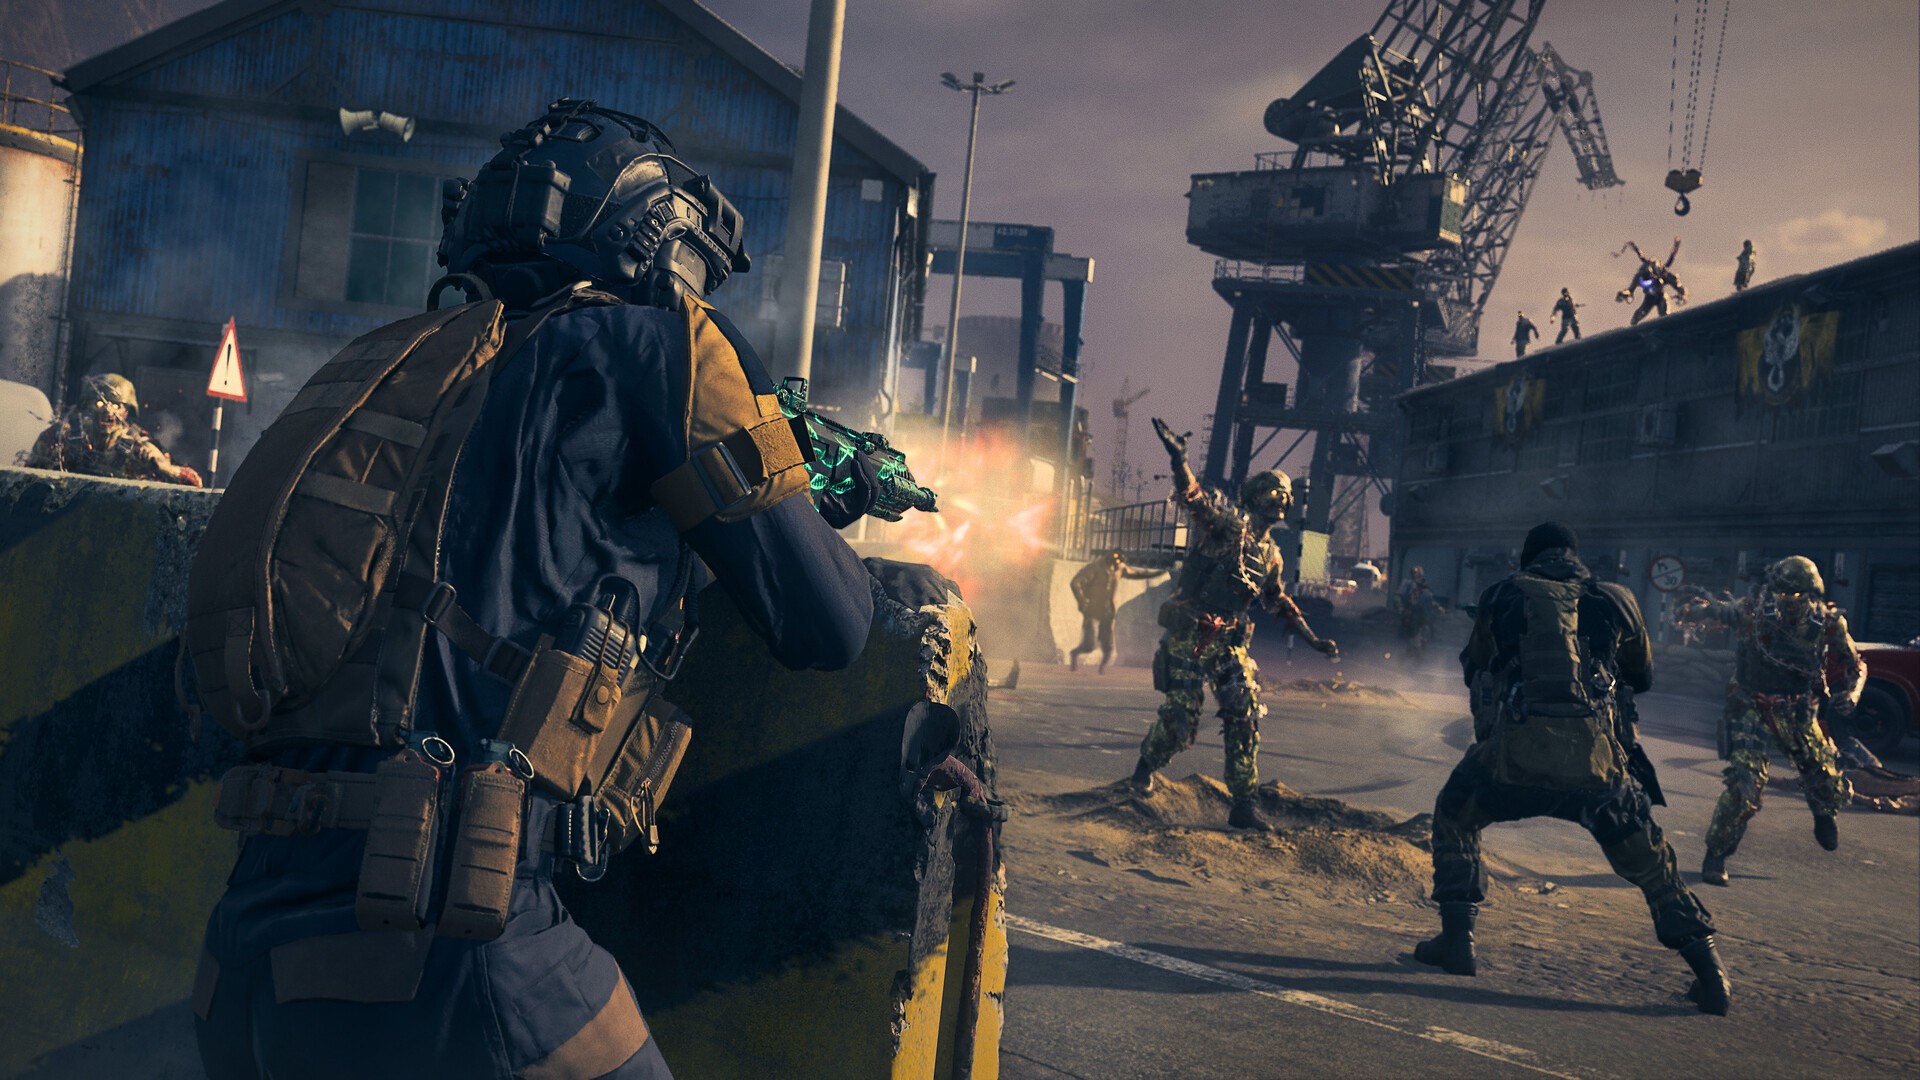 Call of Duty: Modern Warfare 2 - Cross-Gen Bundle Xbox Series X, S Xbox One